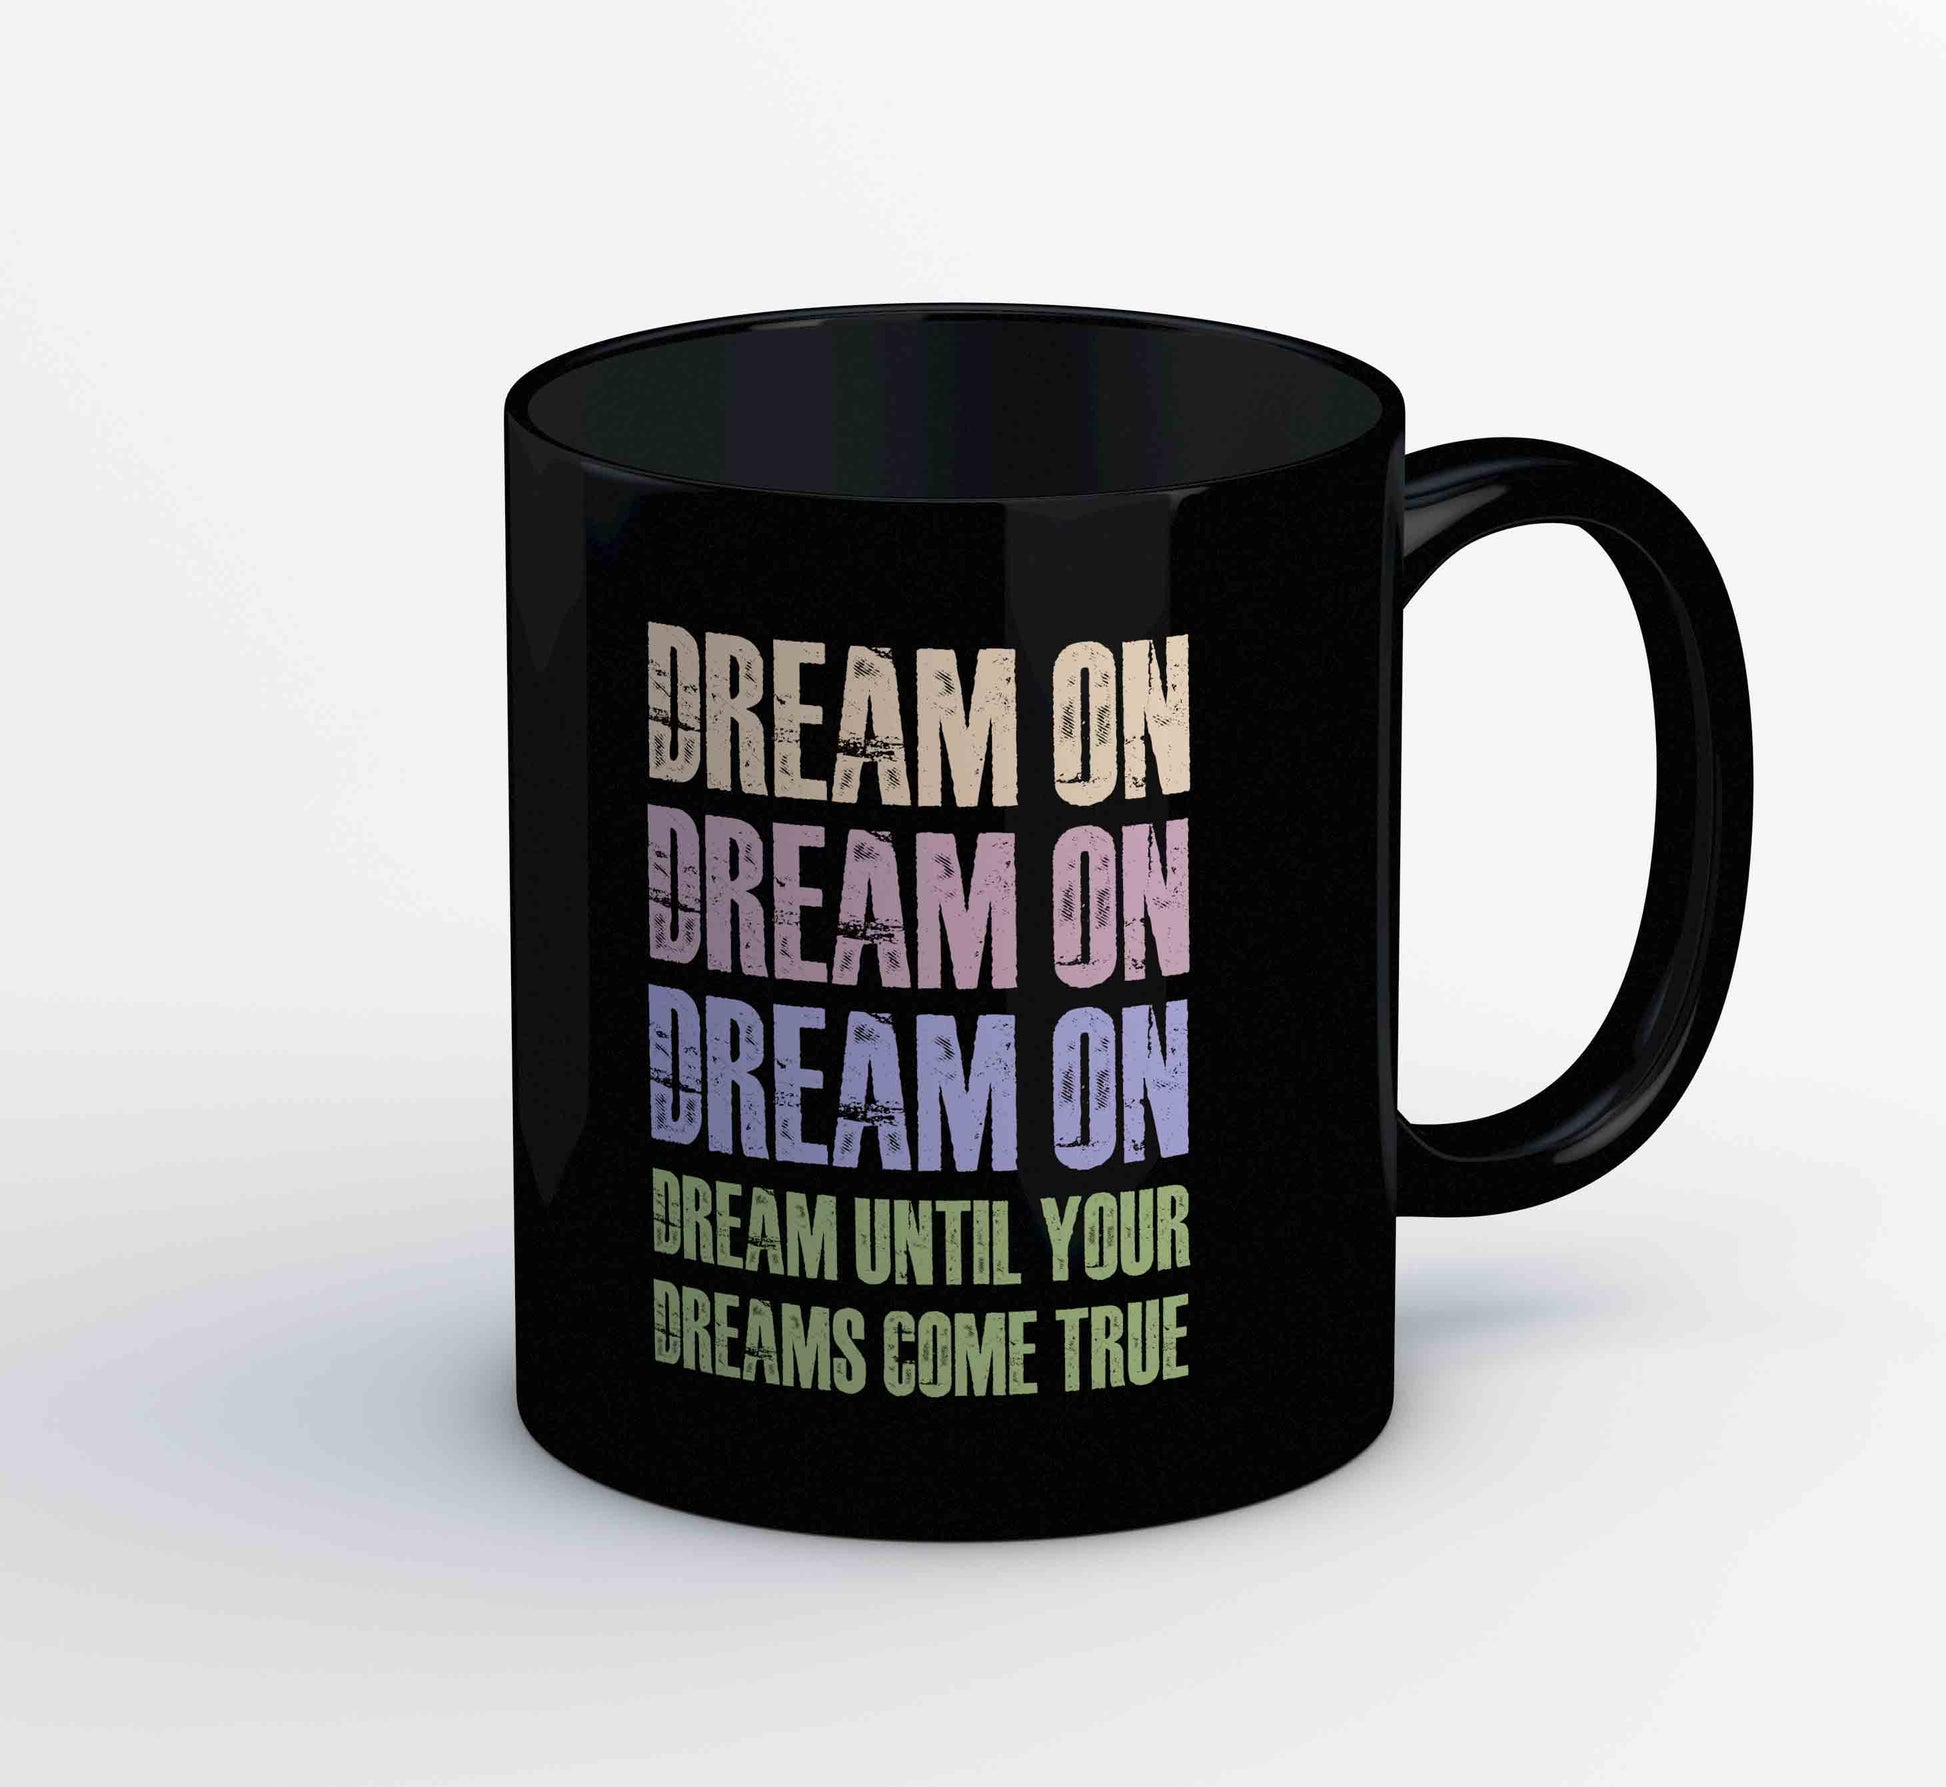 aerosmith dream on mug coffee ceramic music band buy online india the banyan tee tbt men women girls boys unisex